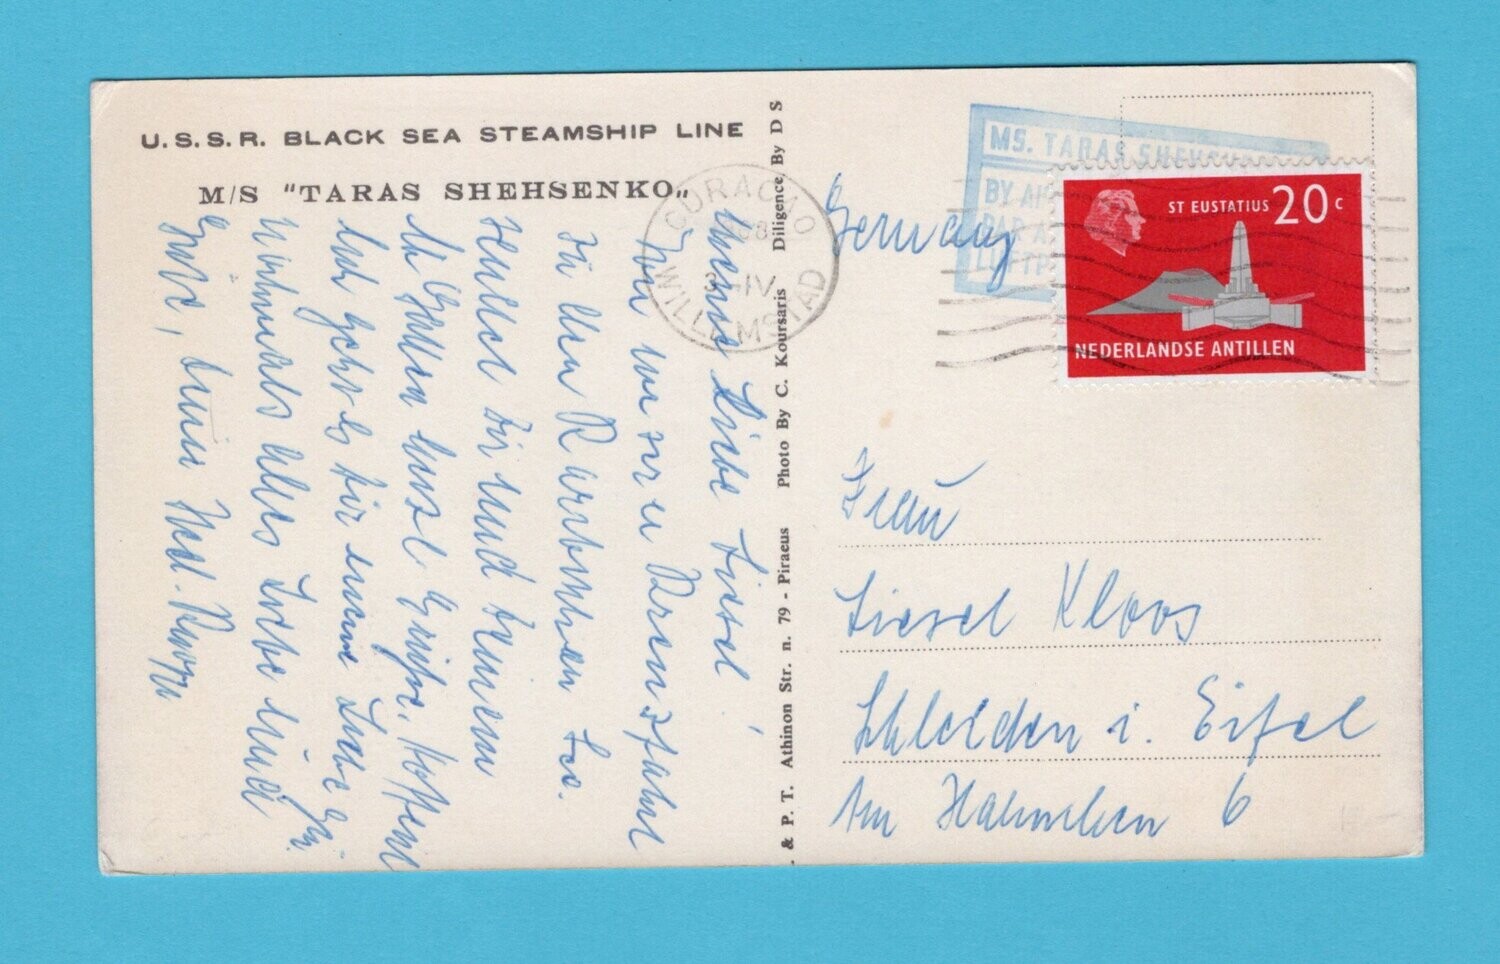 CURAÇAO prentbriefkaart 1968 M.S. Taras Shehsenko USSR